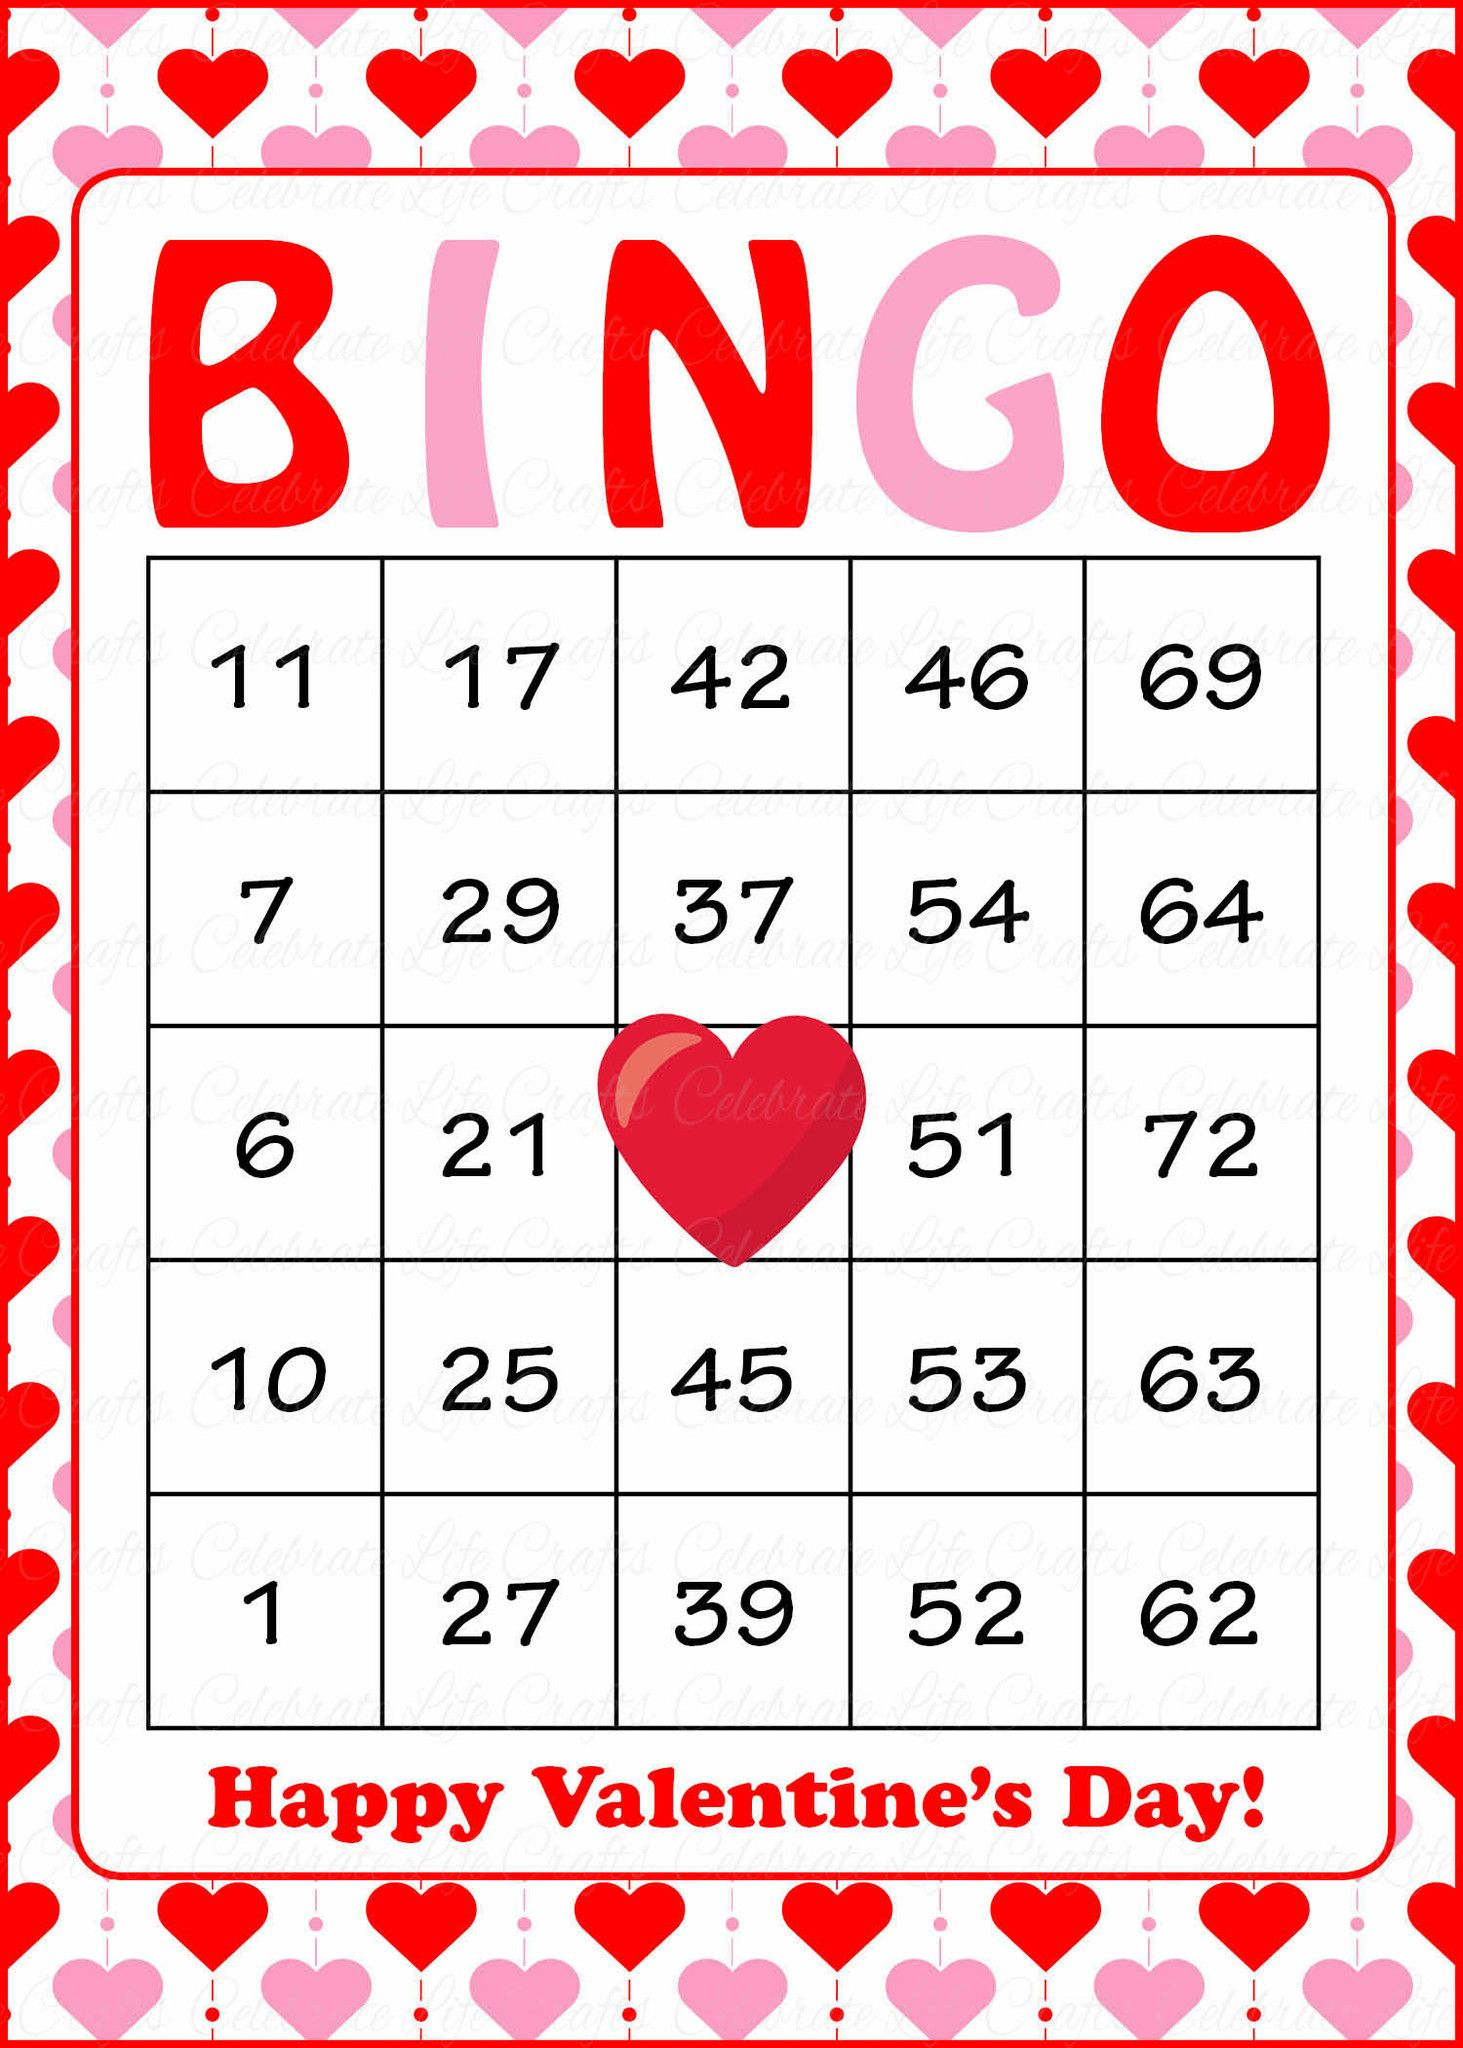 Valentine's Bingo Cards - Printable Download - Prefilled